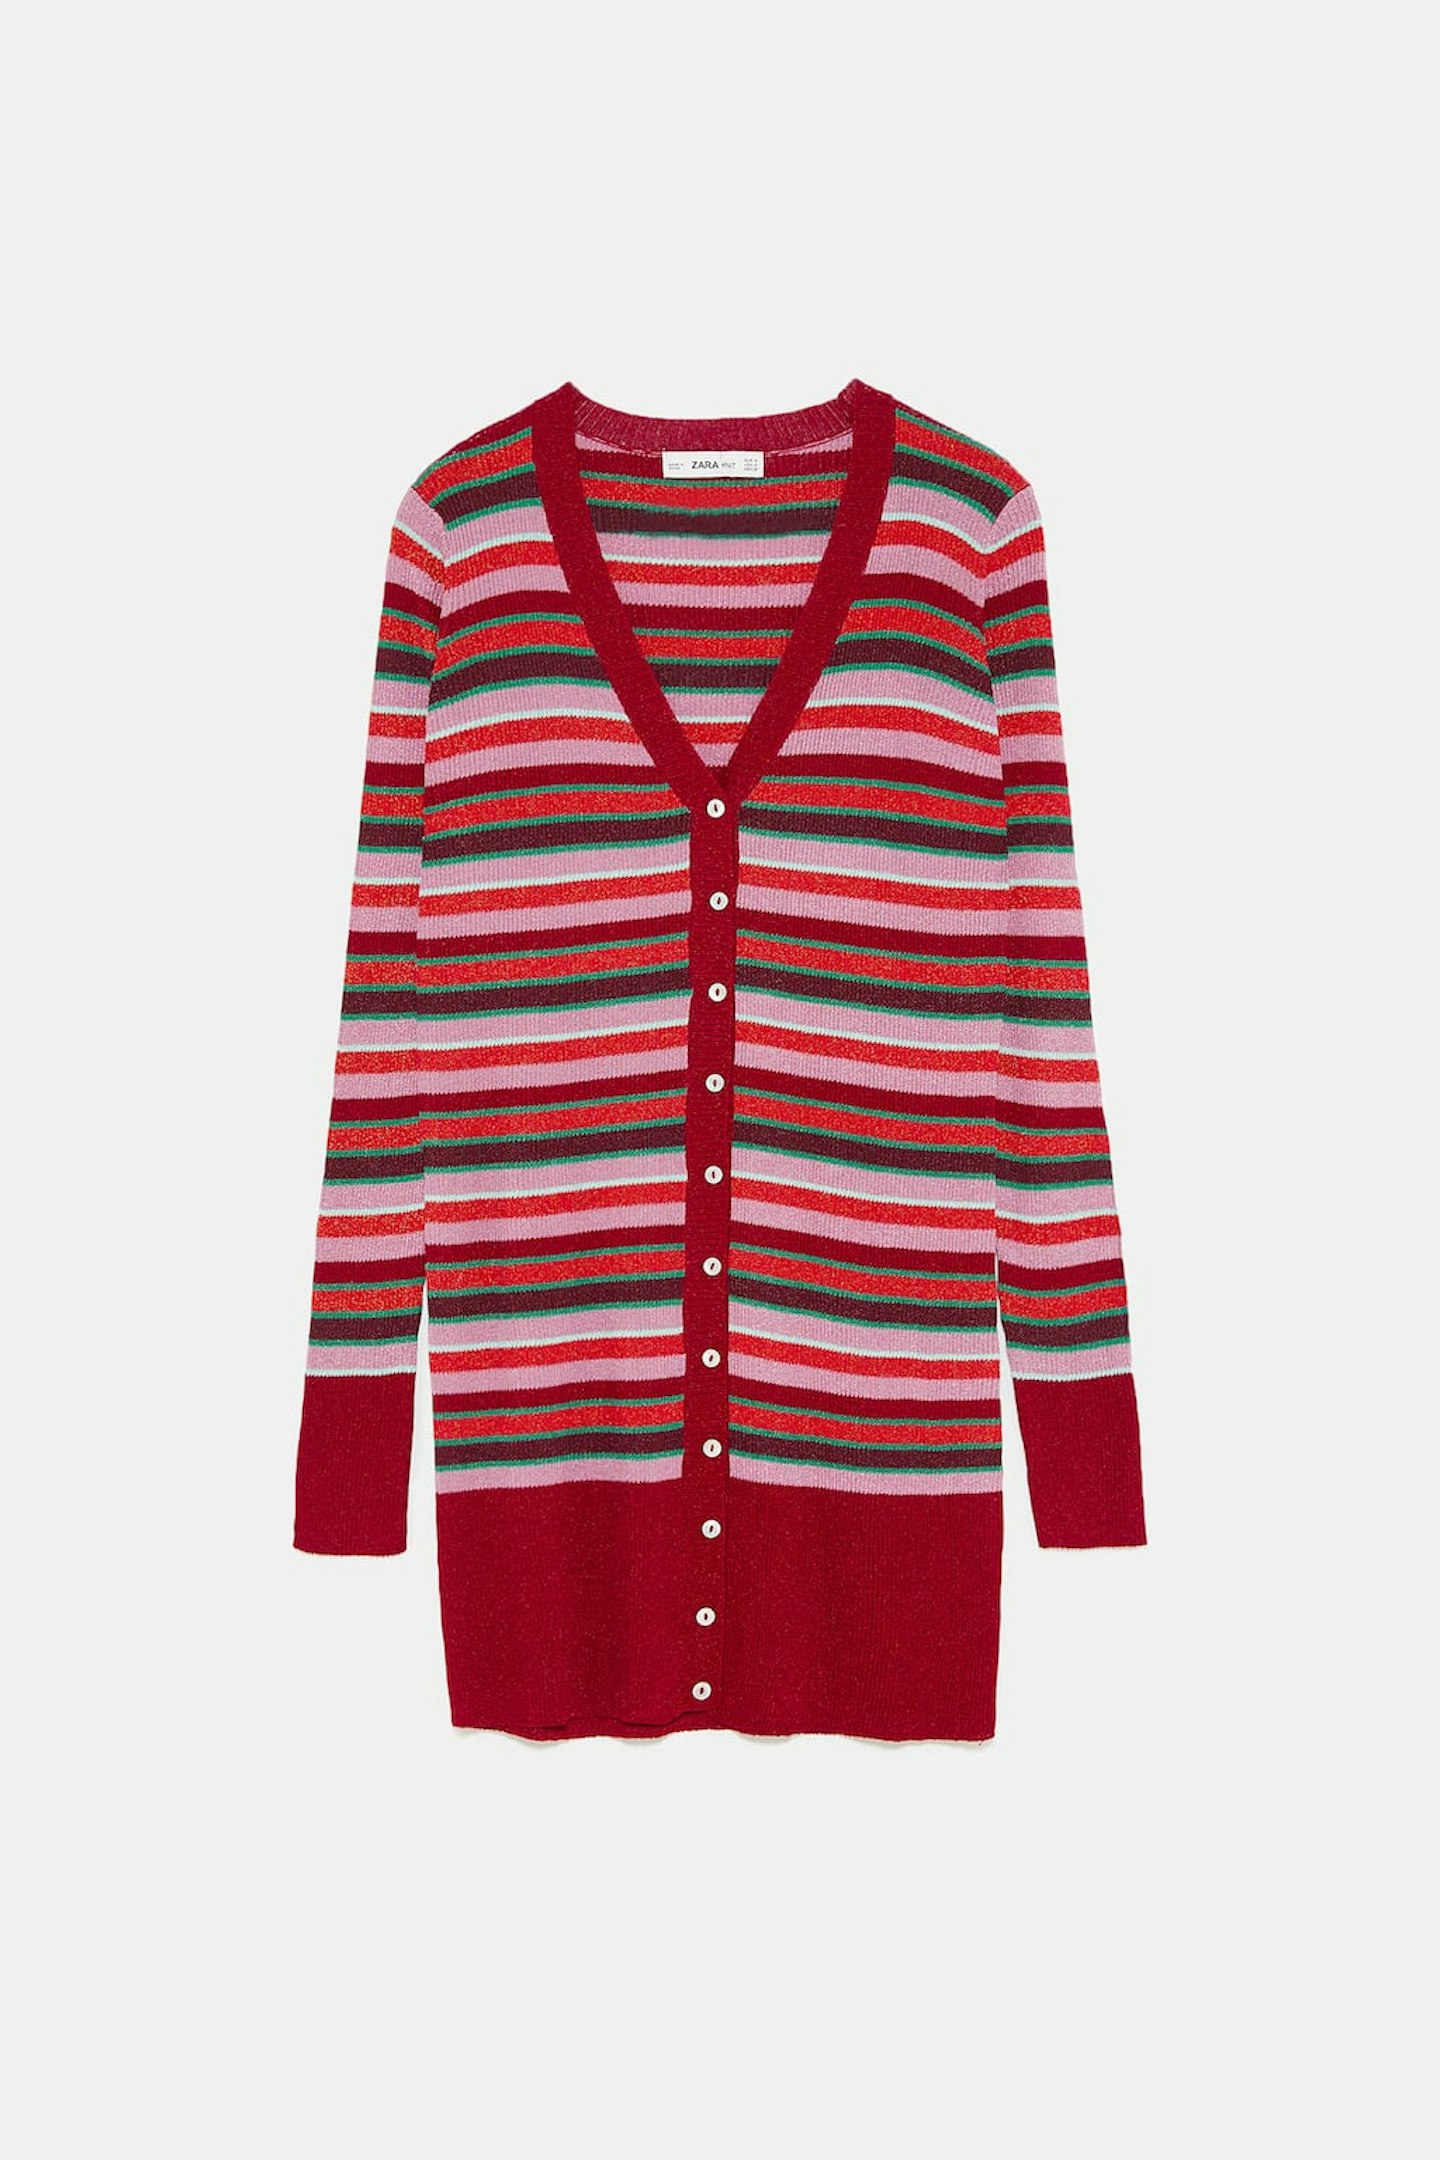 Zara, Striped Shimmer Thread Cardigan, £49.99